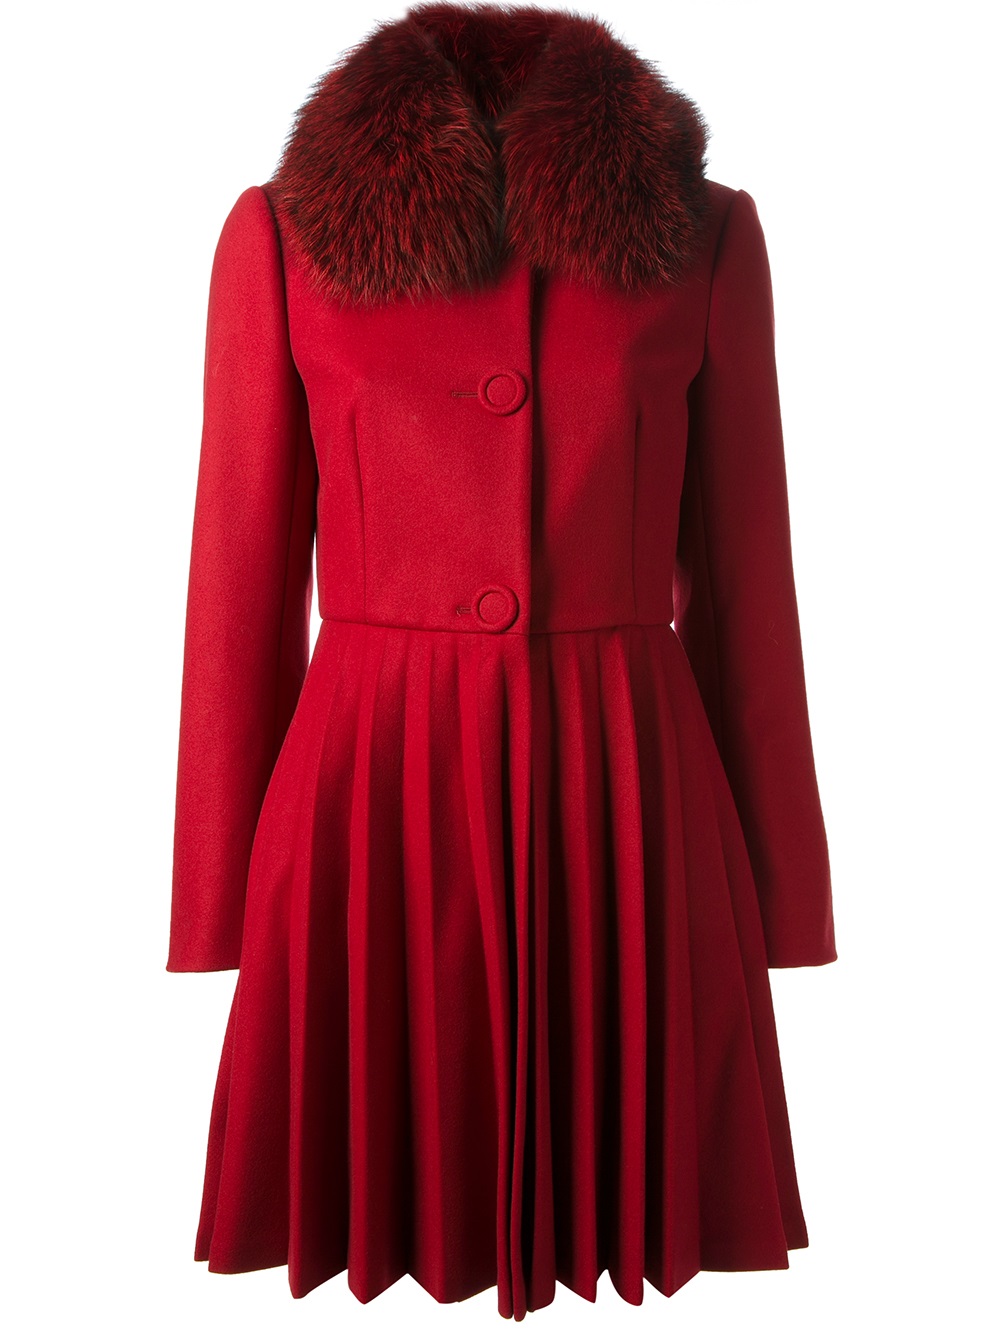 Lyst - Red Valentino Fox Fur Collar Coat in Red